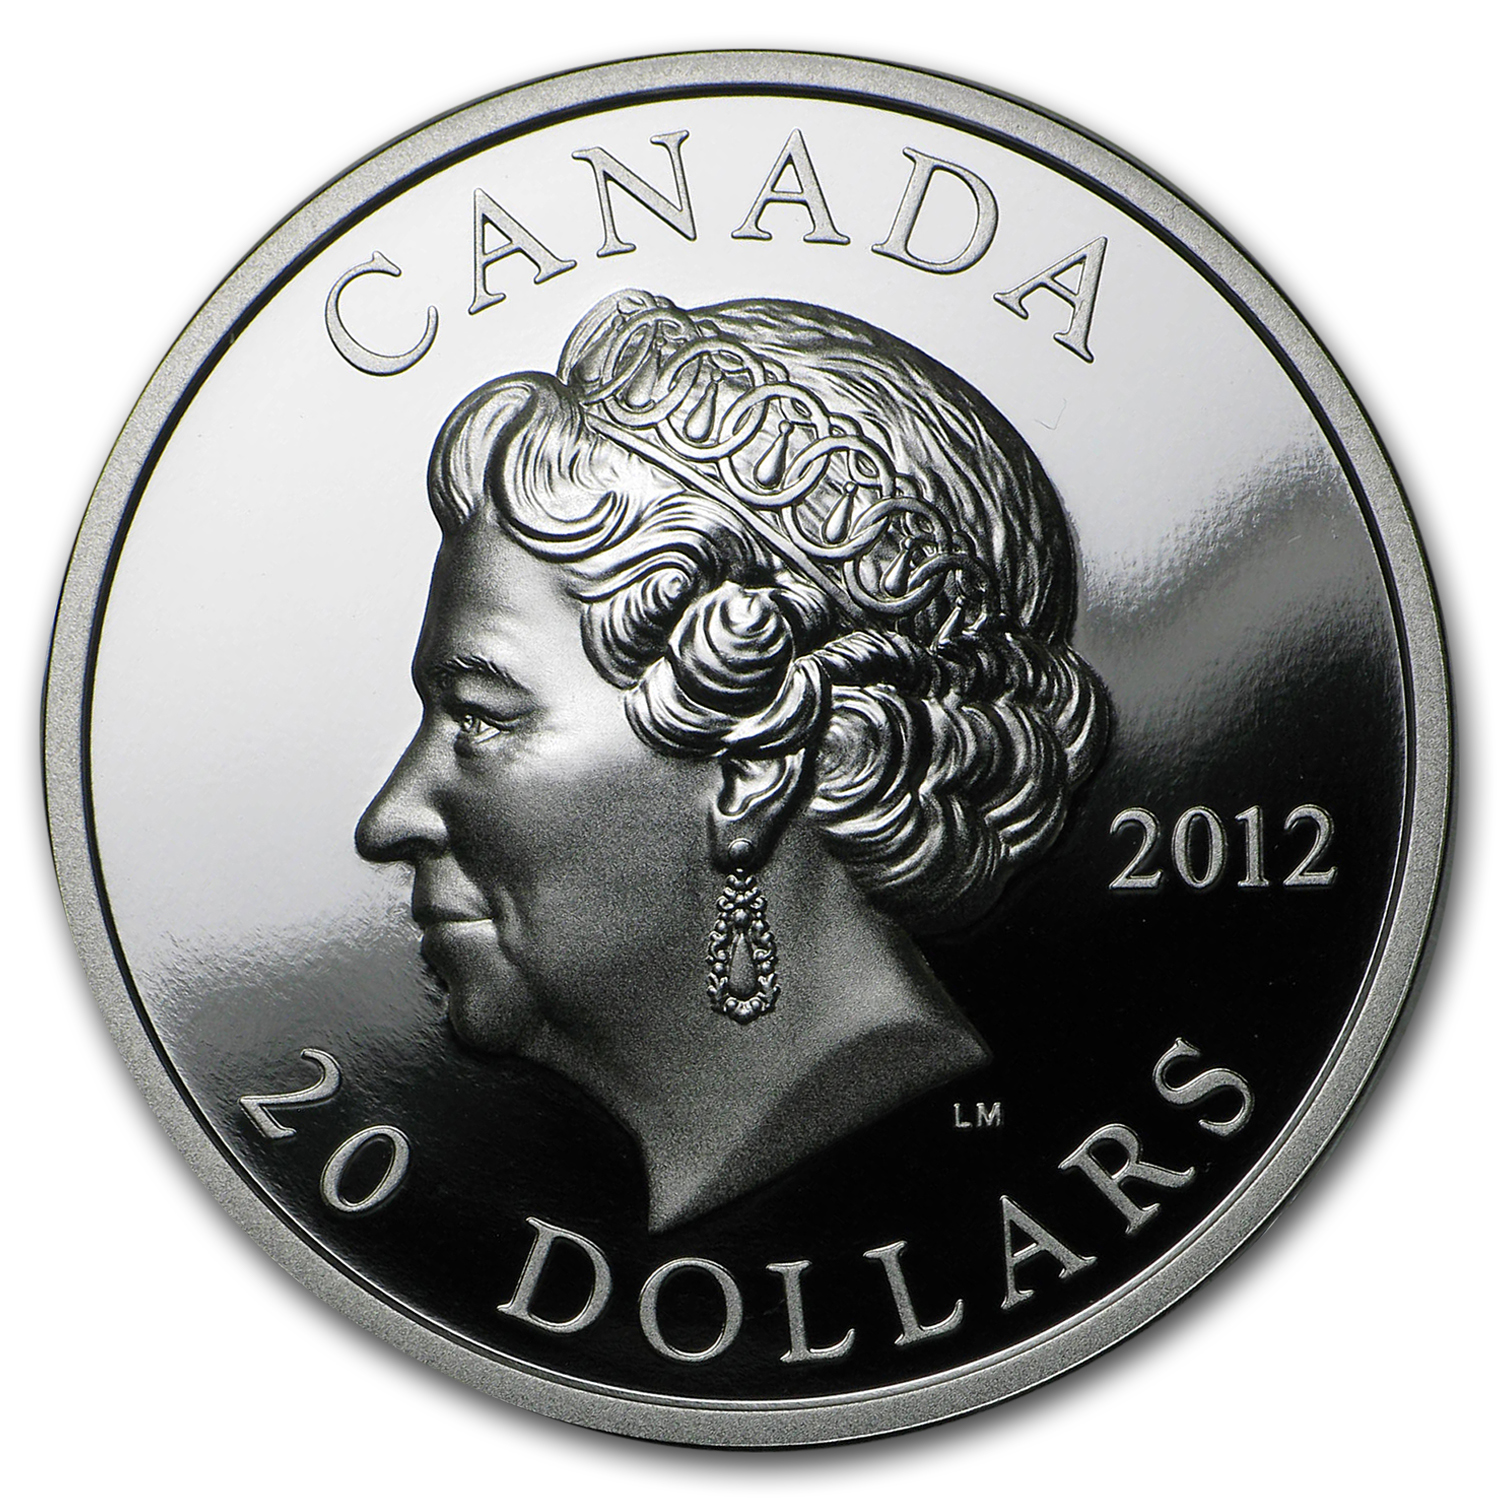 Queen's Diamond Jubilee Double Effigy 2012 Canada $20 Fine Silver Coin 